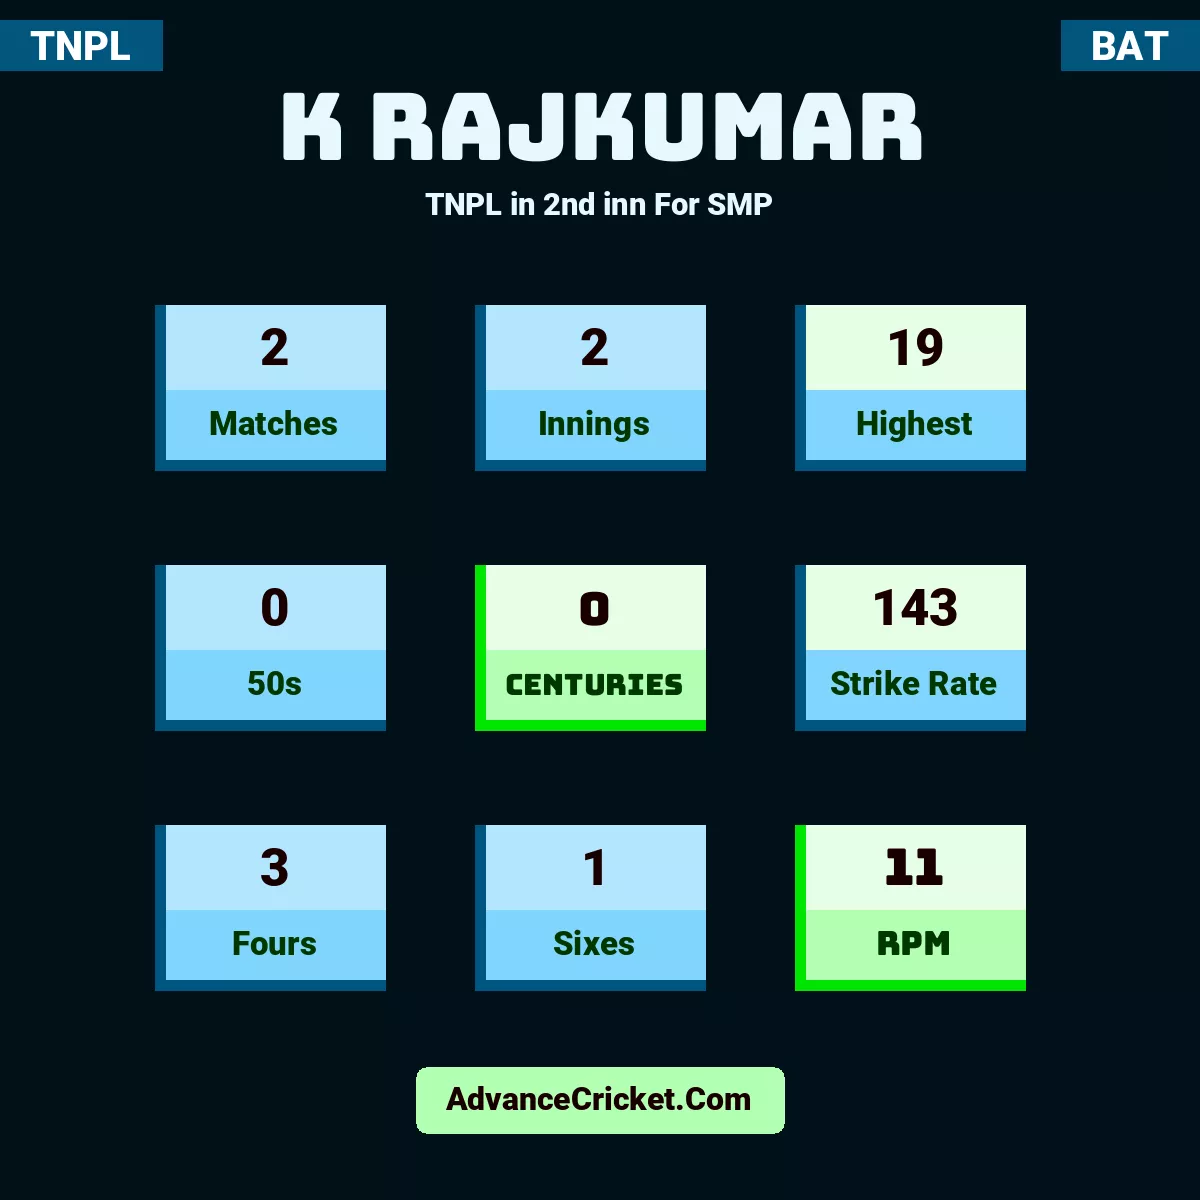 K Rajkumar TNPL  in 2nd inn For SMP, K Rajkumar played 2 matches, scored 19 runs as highest, 0 half-centuries, and 0 centuries, with a strike rate of 143. K.Rajkumar hit 3 fours and 1 sixes, with an RPM of 11.